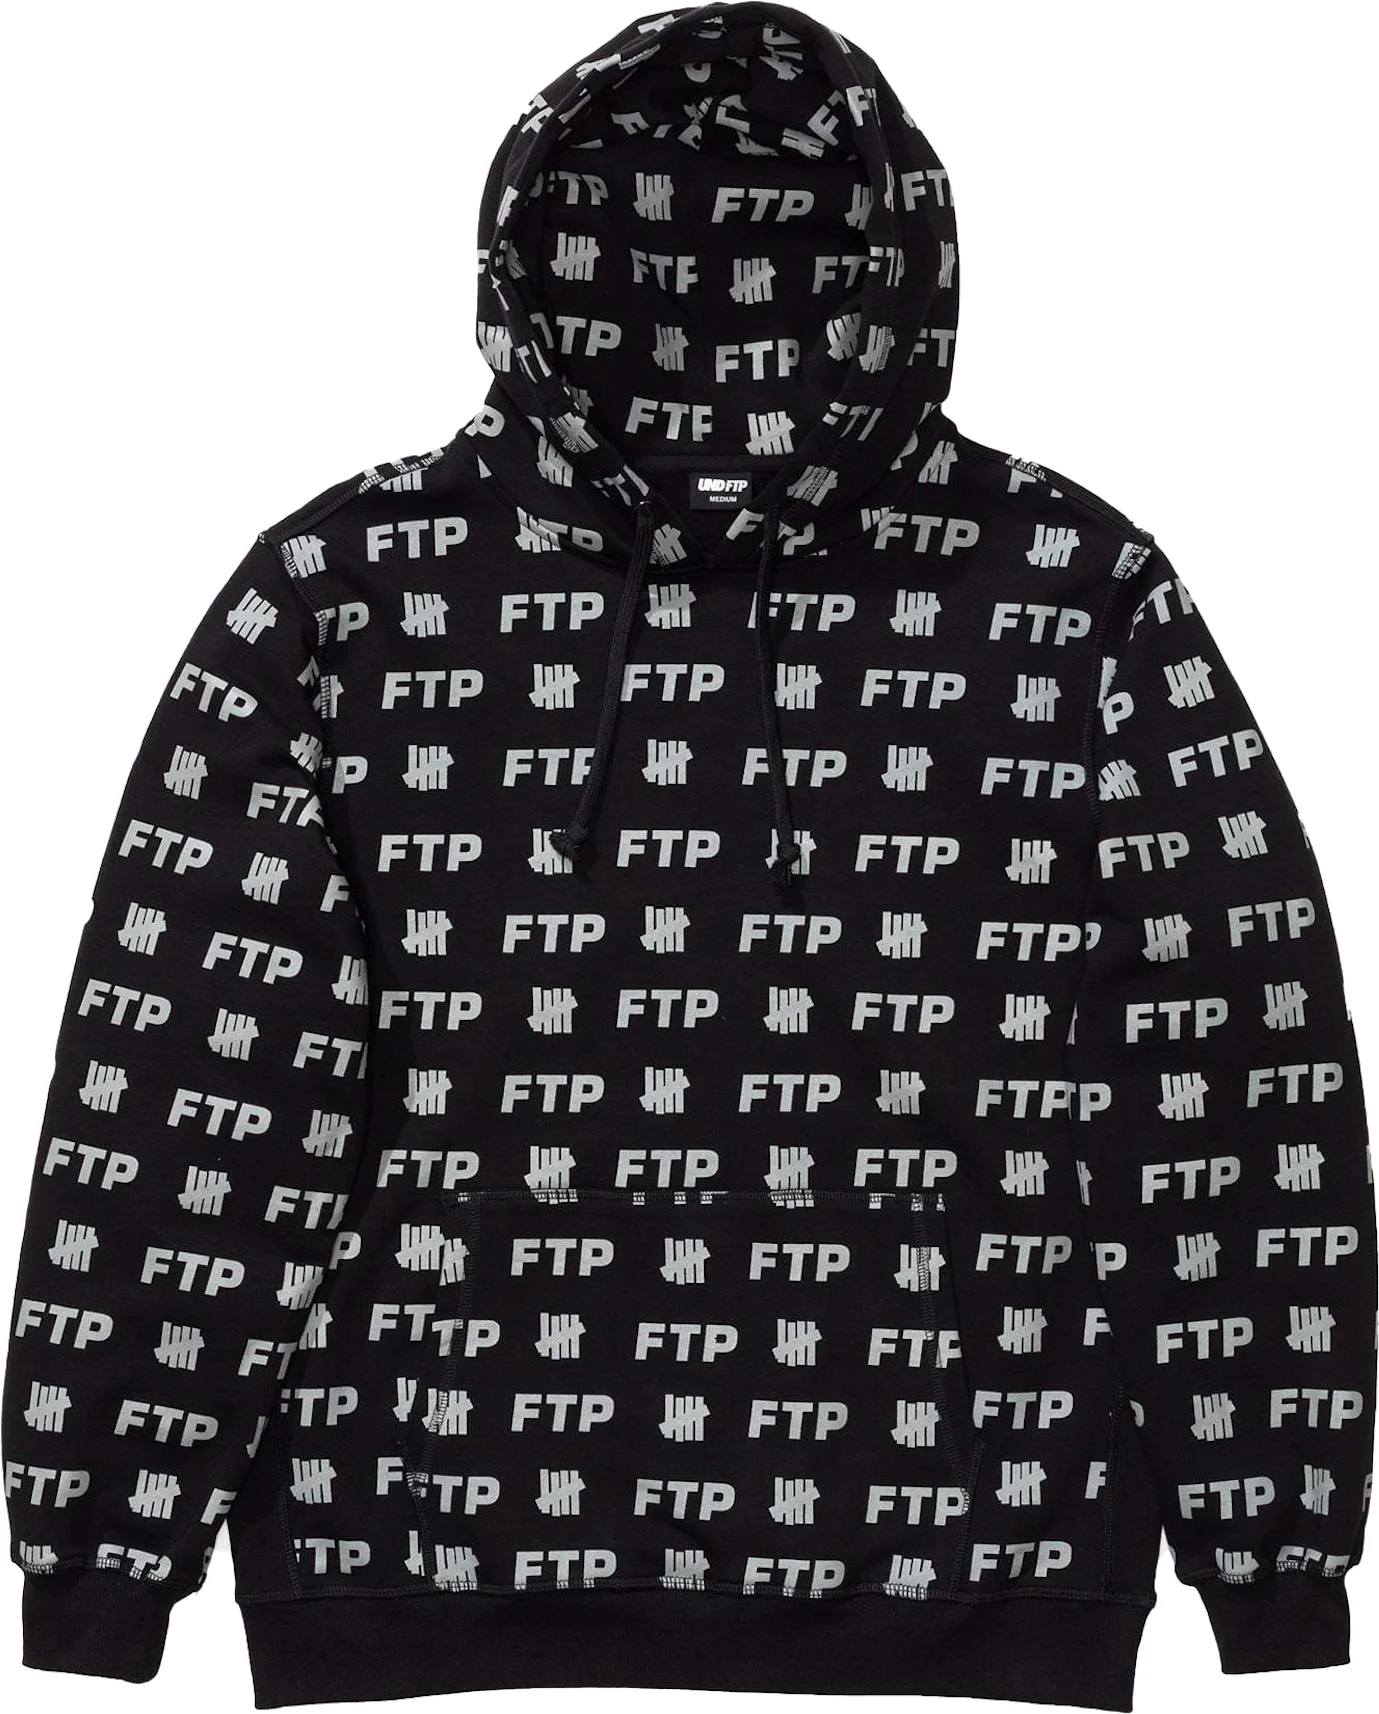 Buy Other Brands FTP Streetwear - StockX